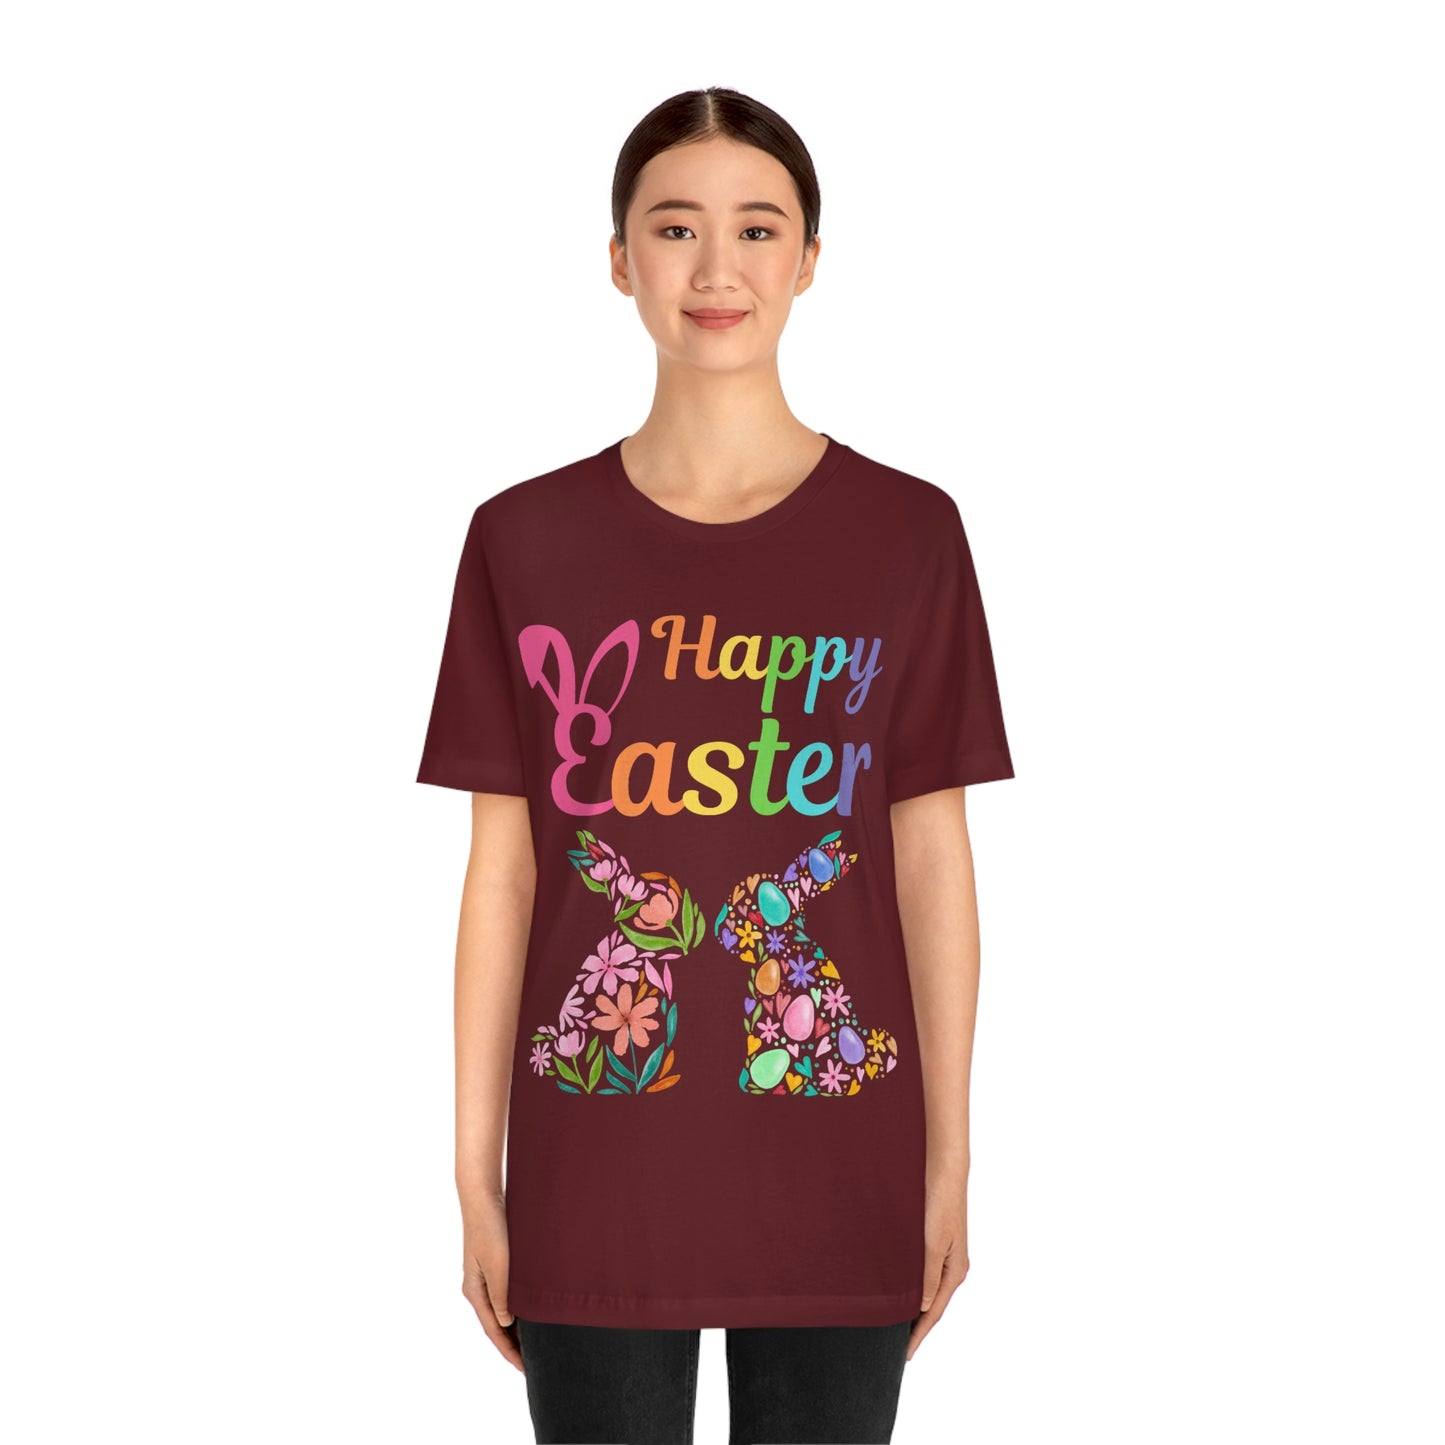 Easter Day Shirt Easter Bunny Easter egg shirt easter Basket